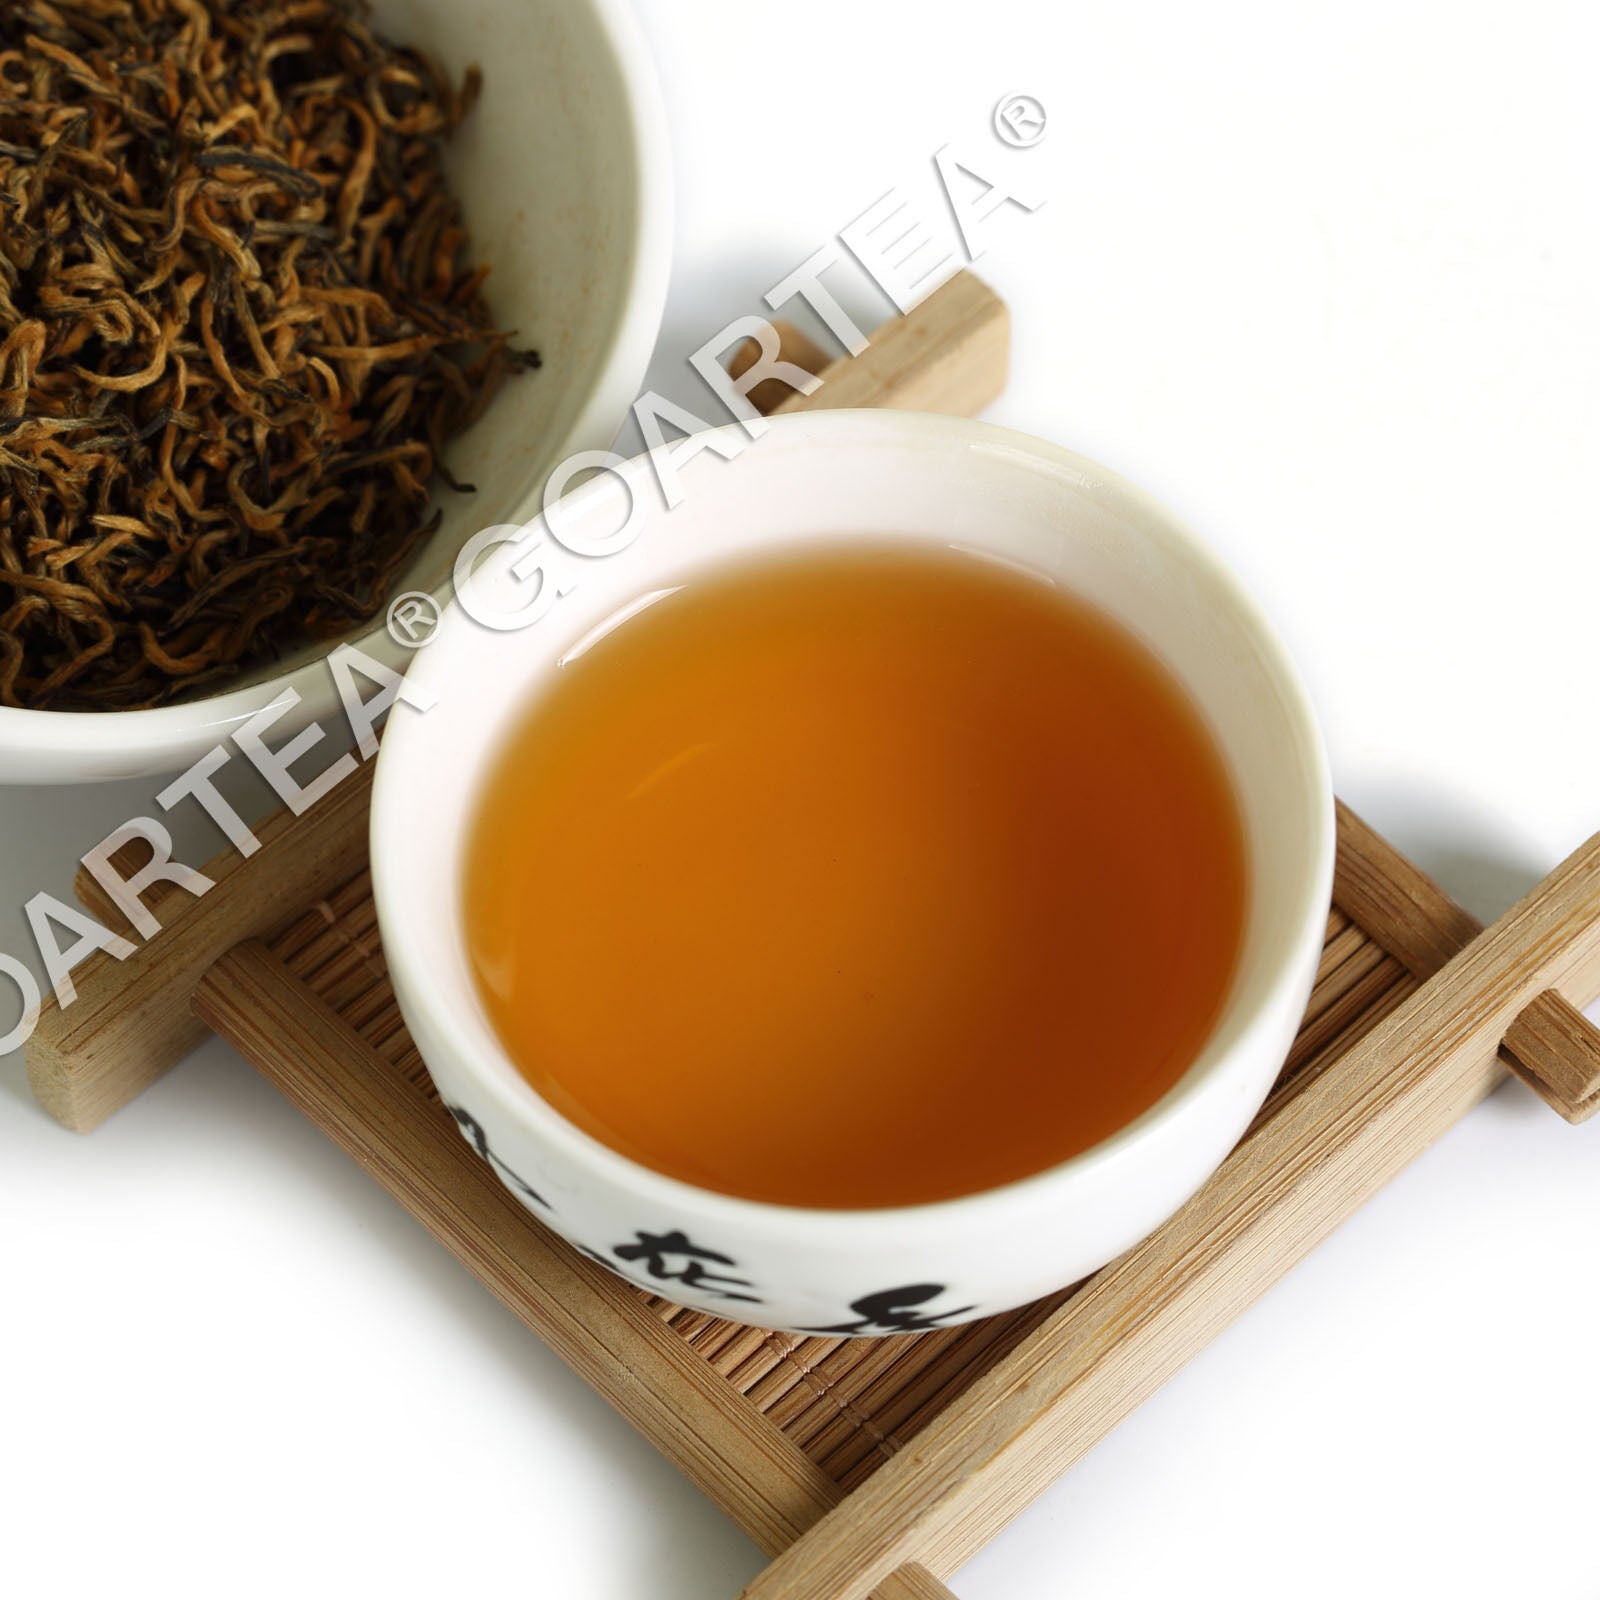 HelloYoung TeaHELLOYOUNG 100g Supreme Wuyi Jinjunmei Eyebrow Black Tea Loose Golden-Buds